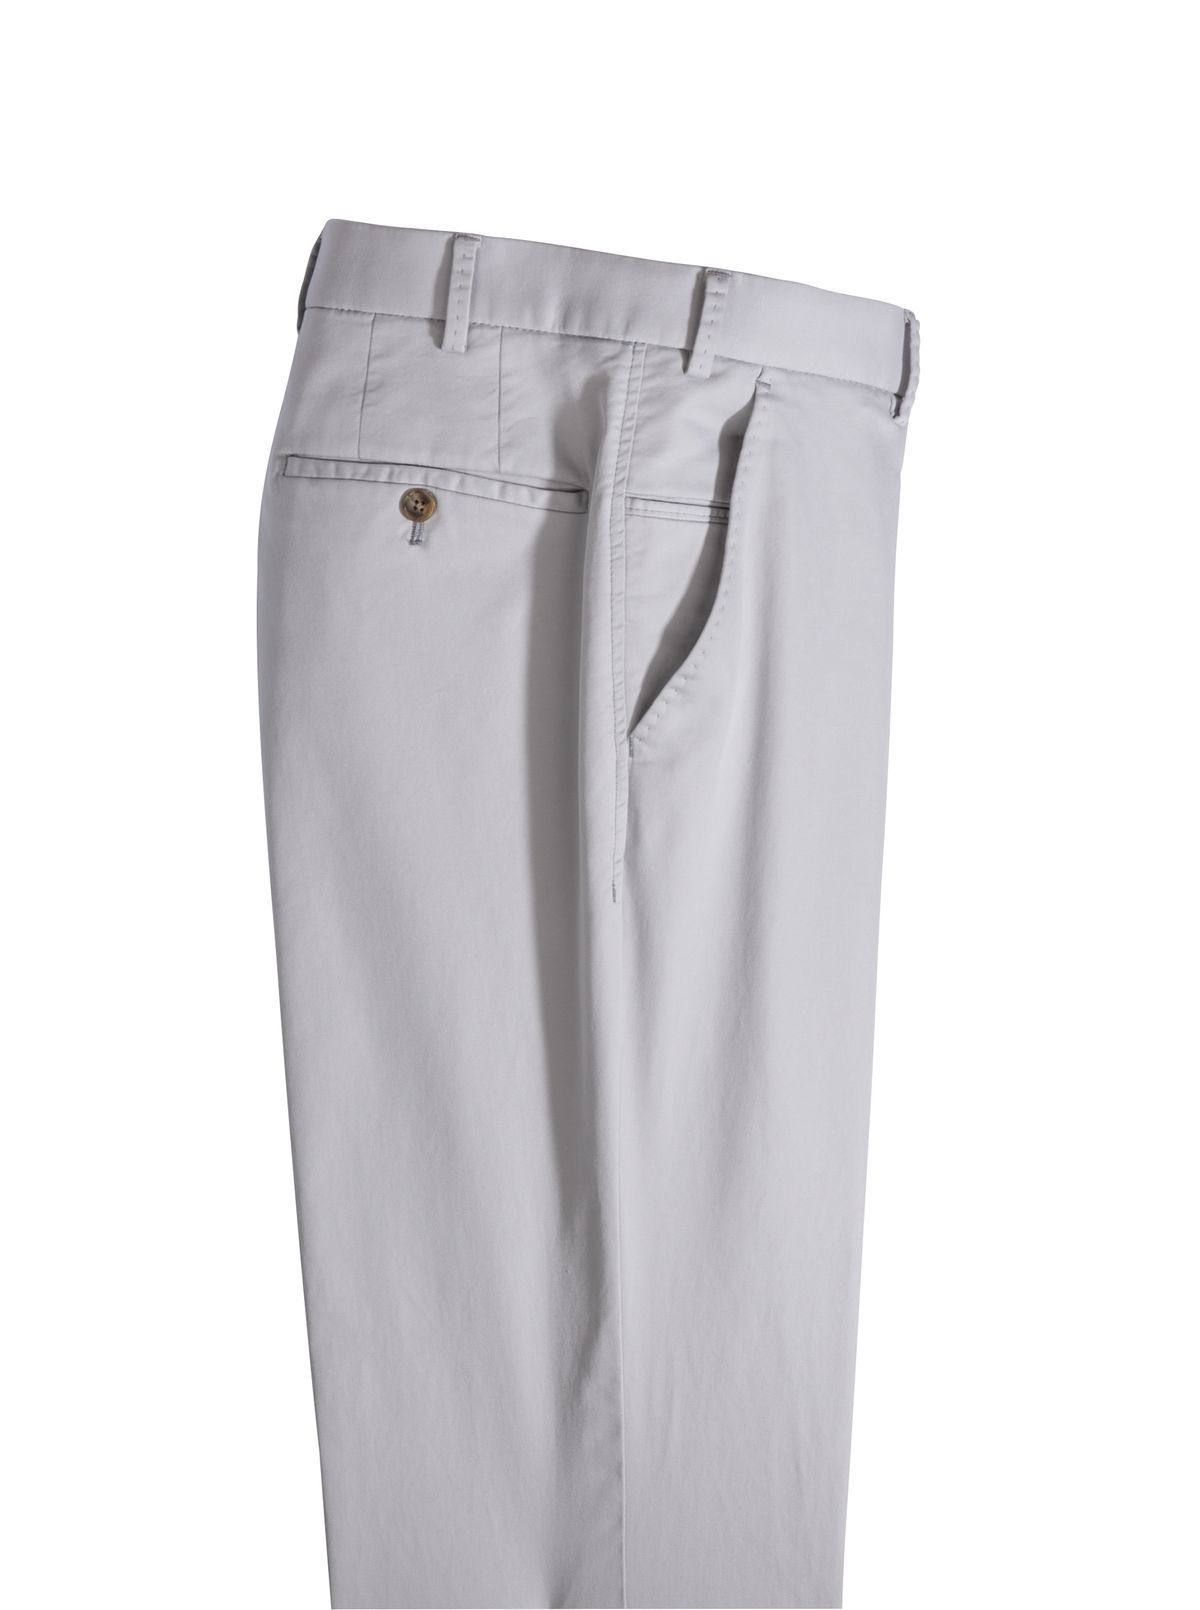 ONLY slacks Green 36                  EU discount 56% WOMEN FASHION Trousers Slacks 